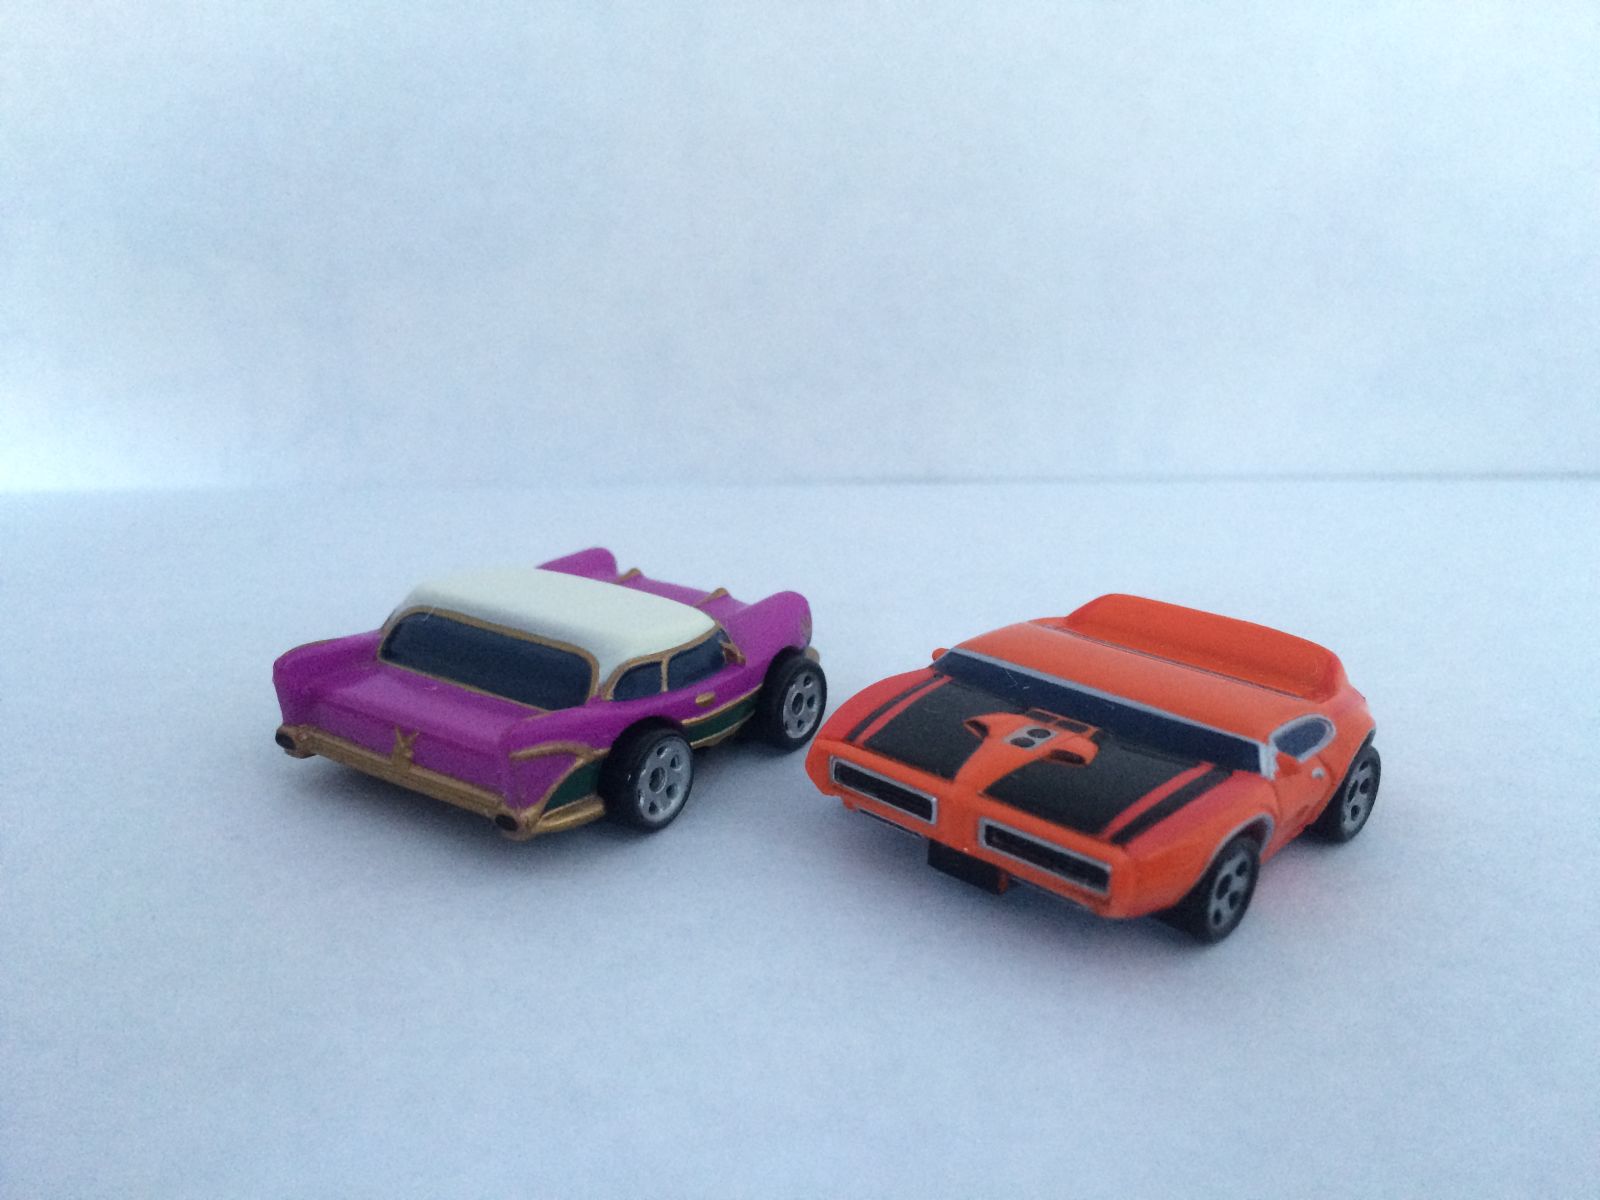  Chevy Bel Air and Pontiac GTO 